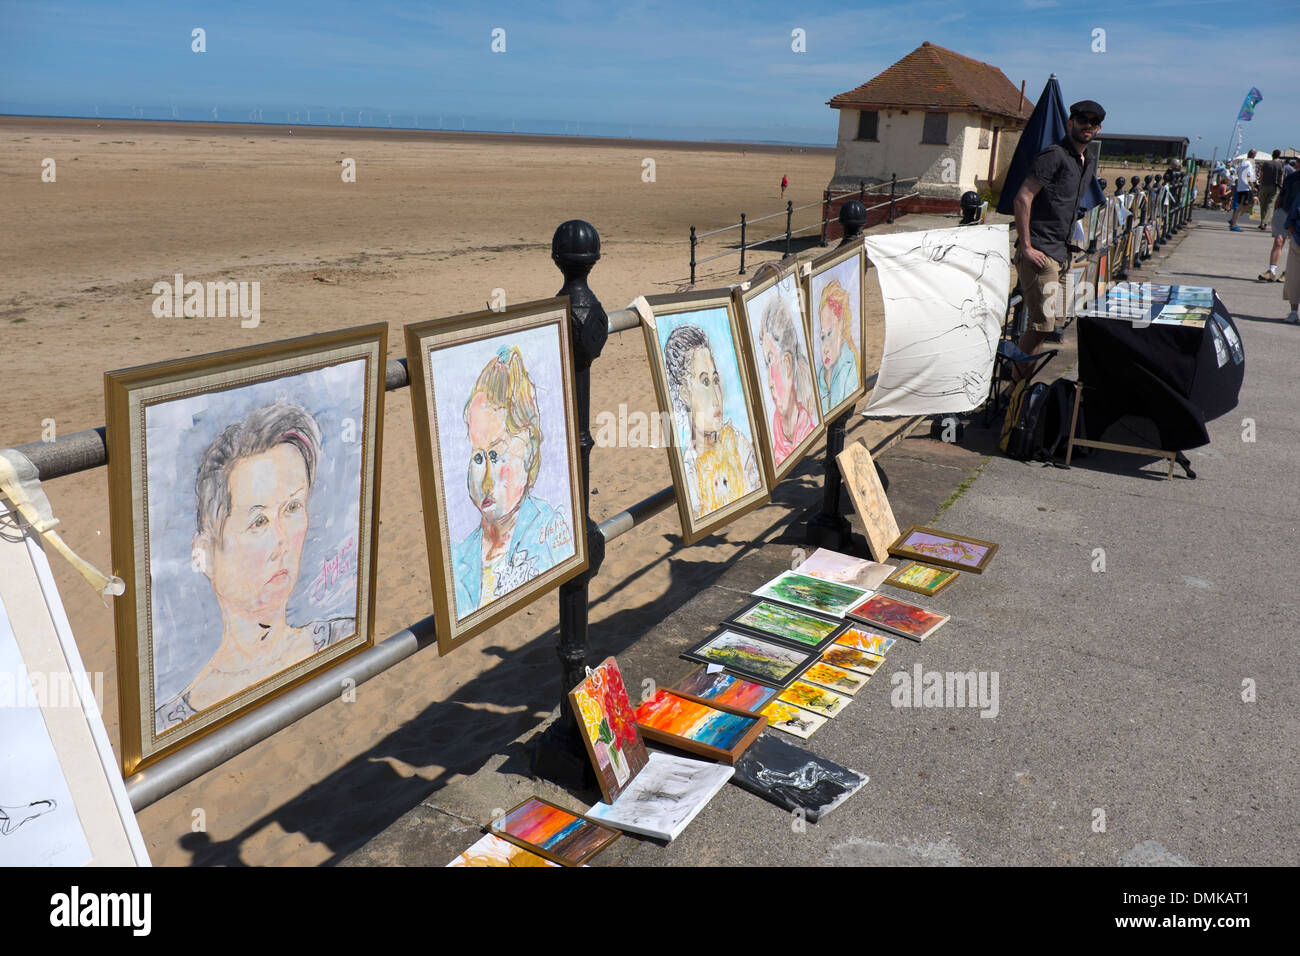 Artists selling paintings at English Seaside Promenade Stock Photo